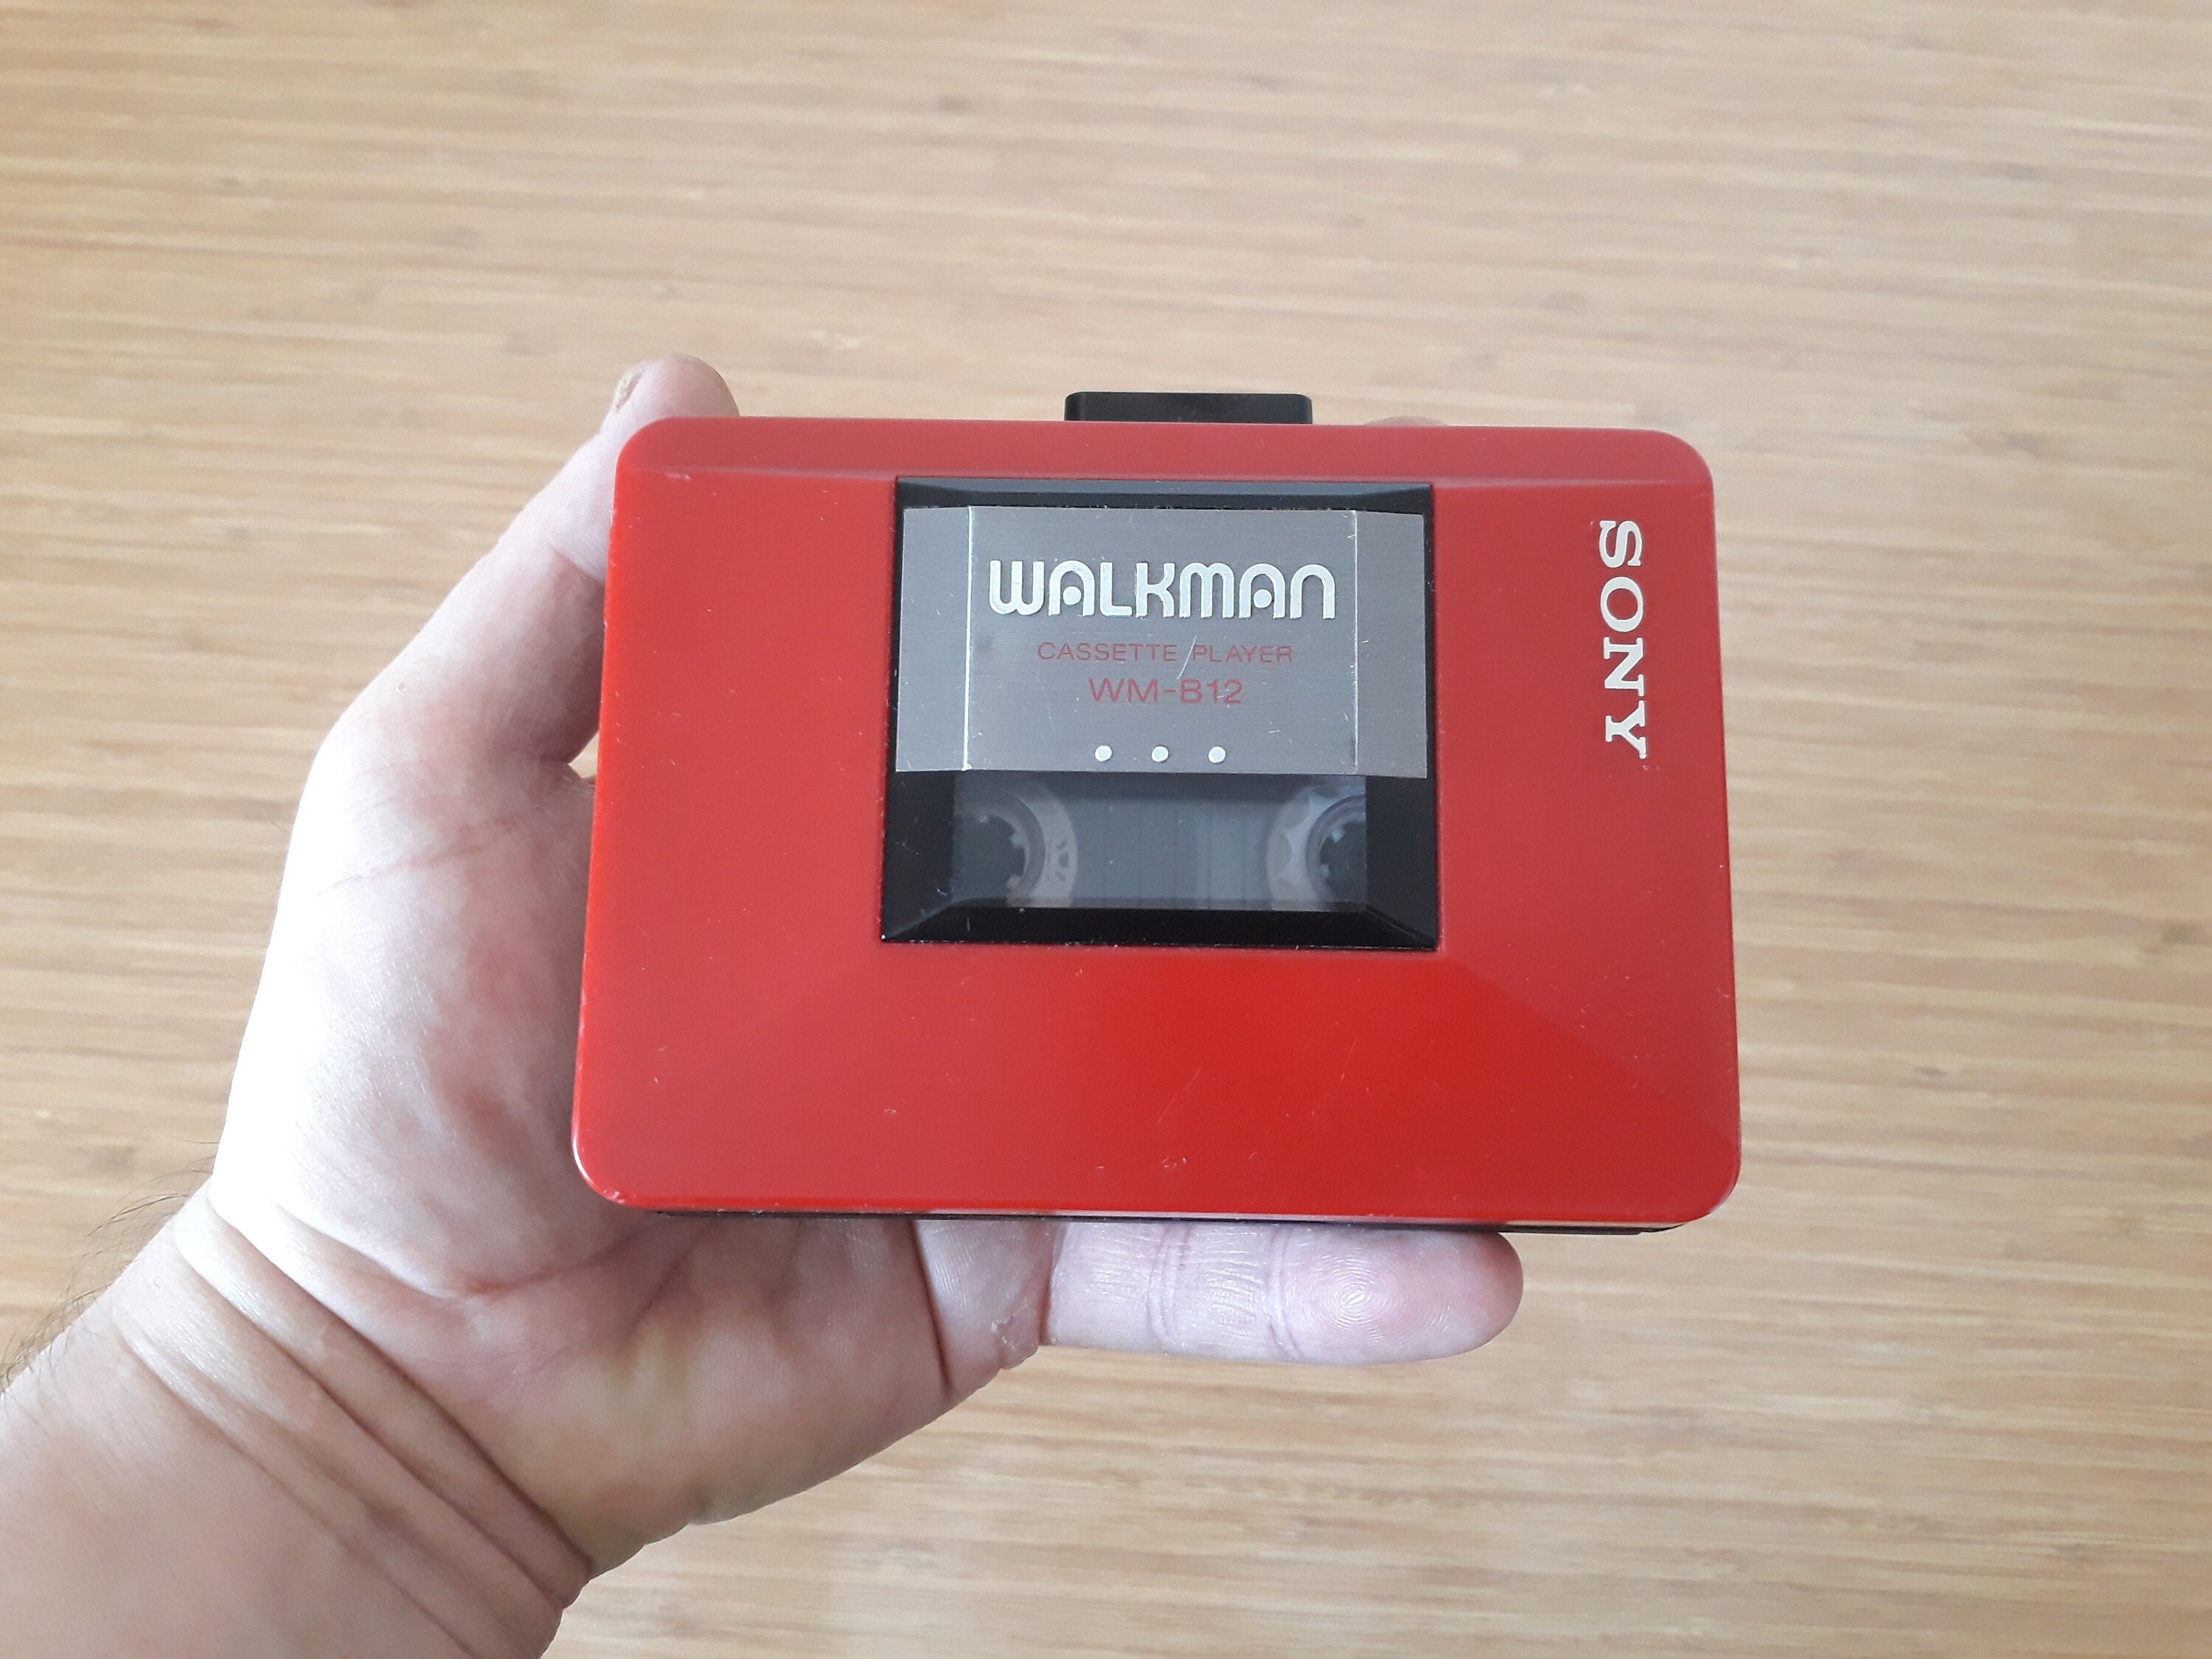 Sony Walkman WM-2011 Portable Cassette Player